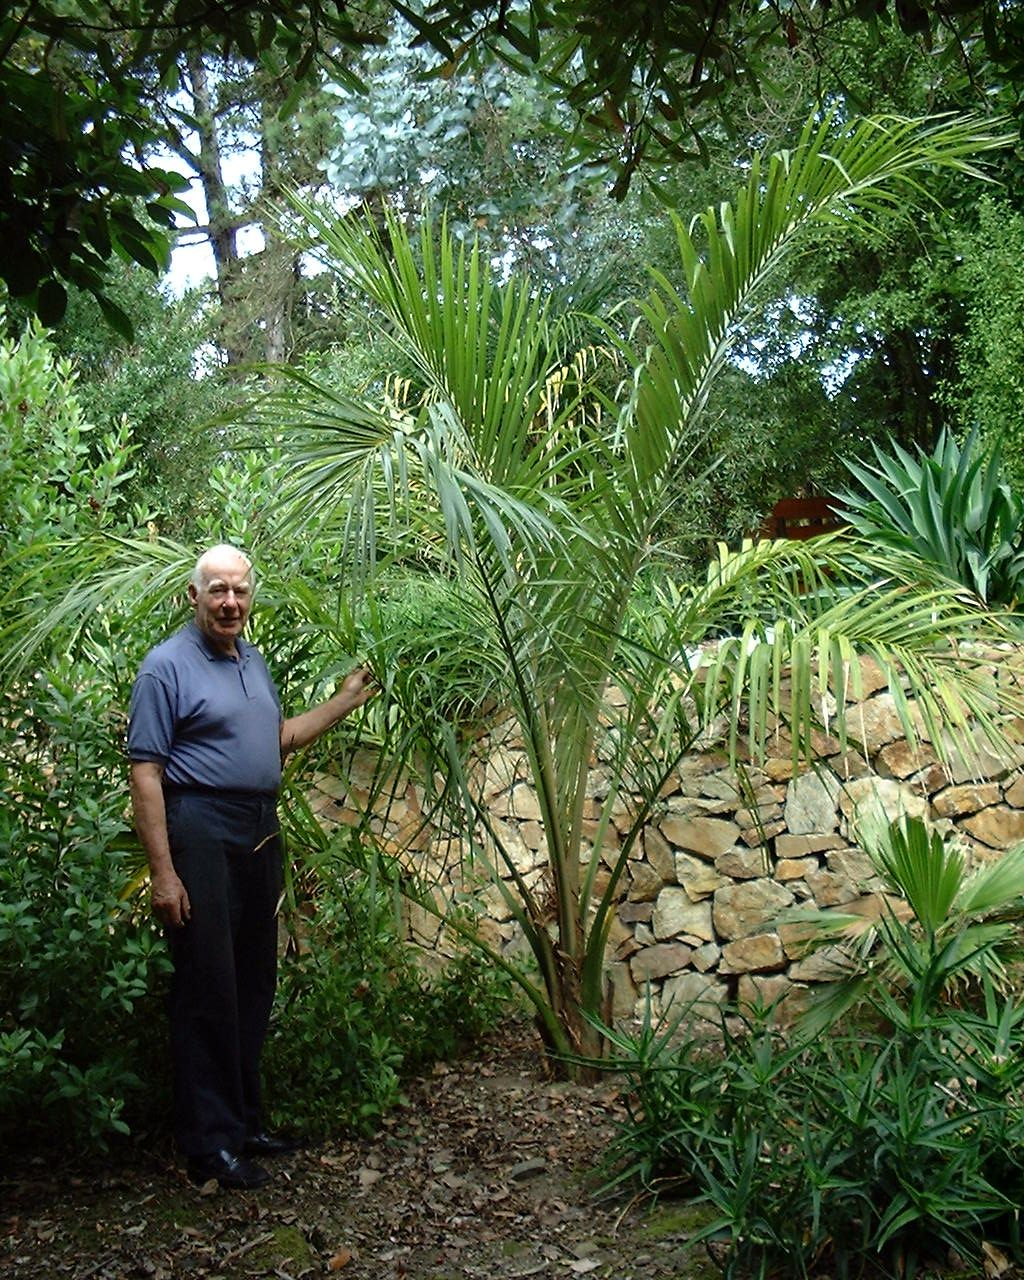 David Robinson in his garden with Juania australis 2003